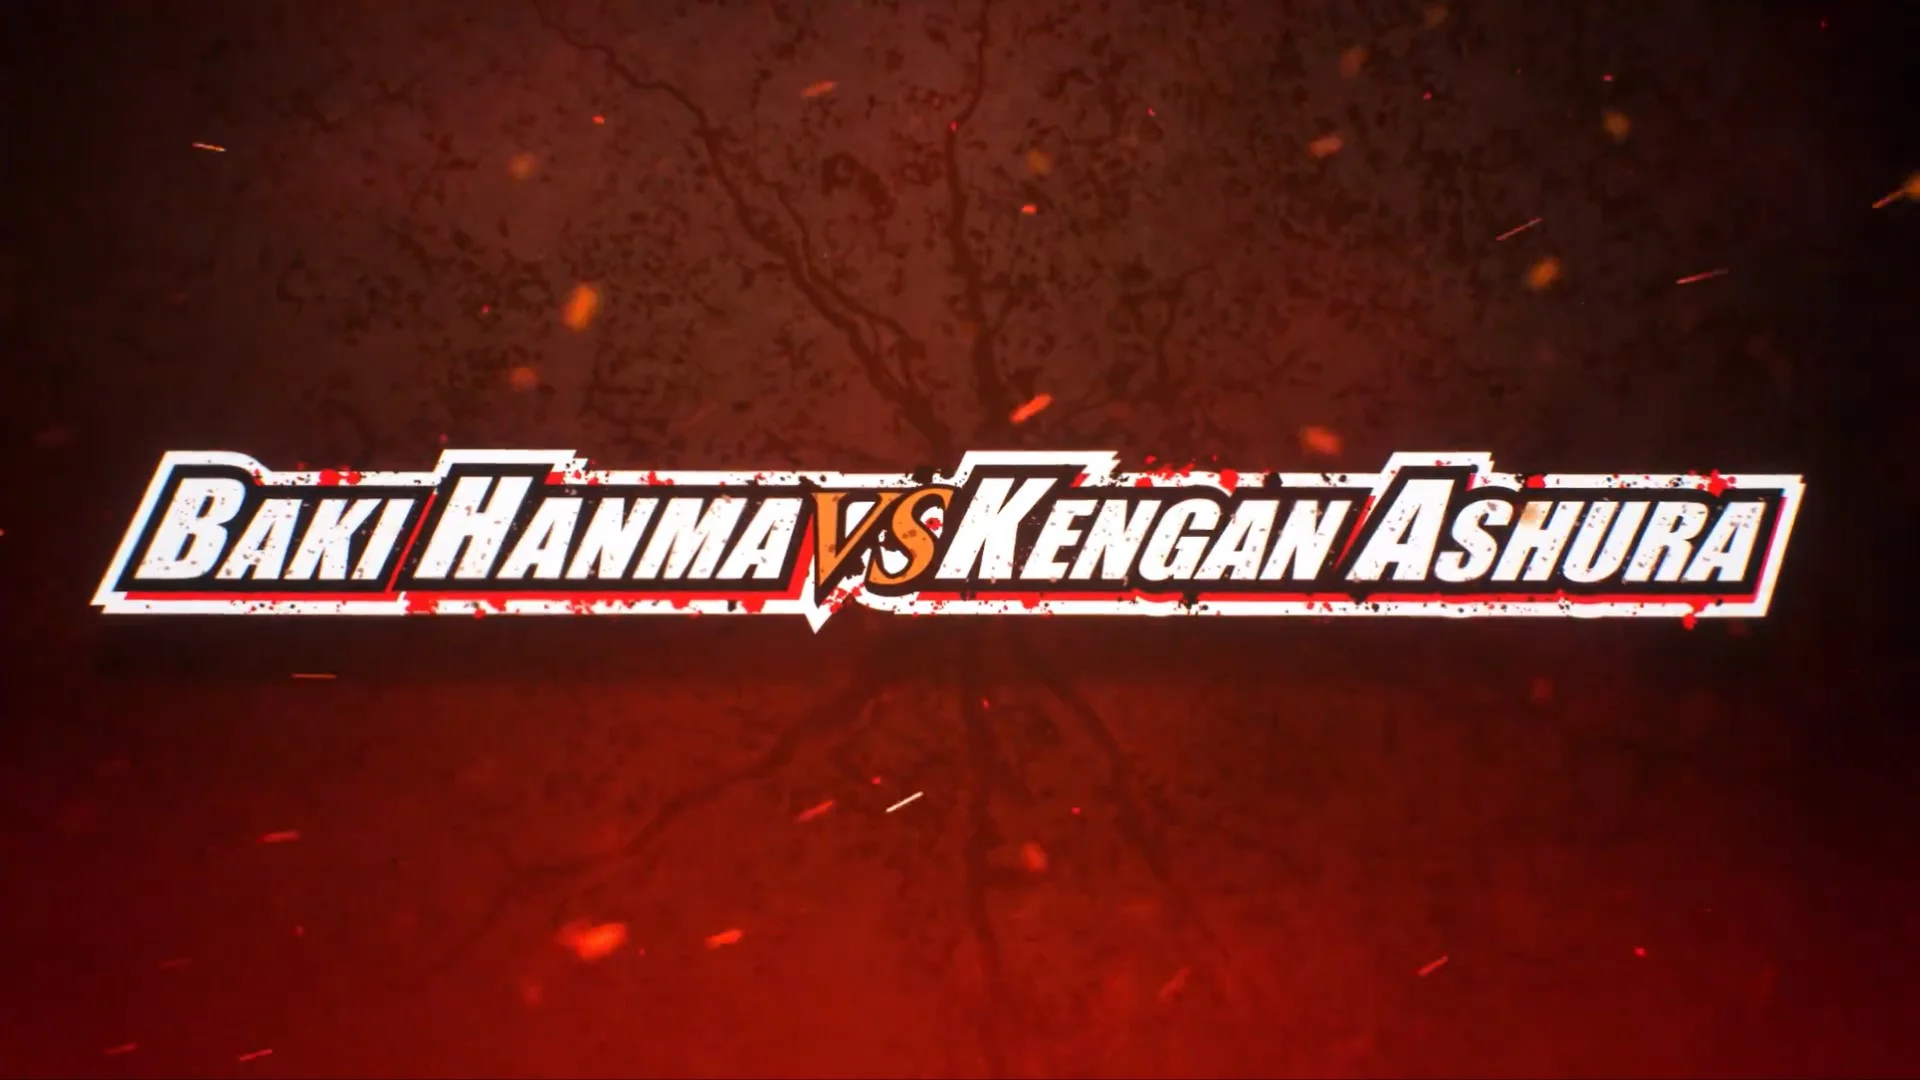 Baki Hanma VS Kengan Ashura movie news otaku mantra